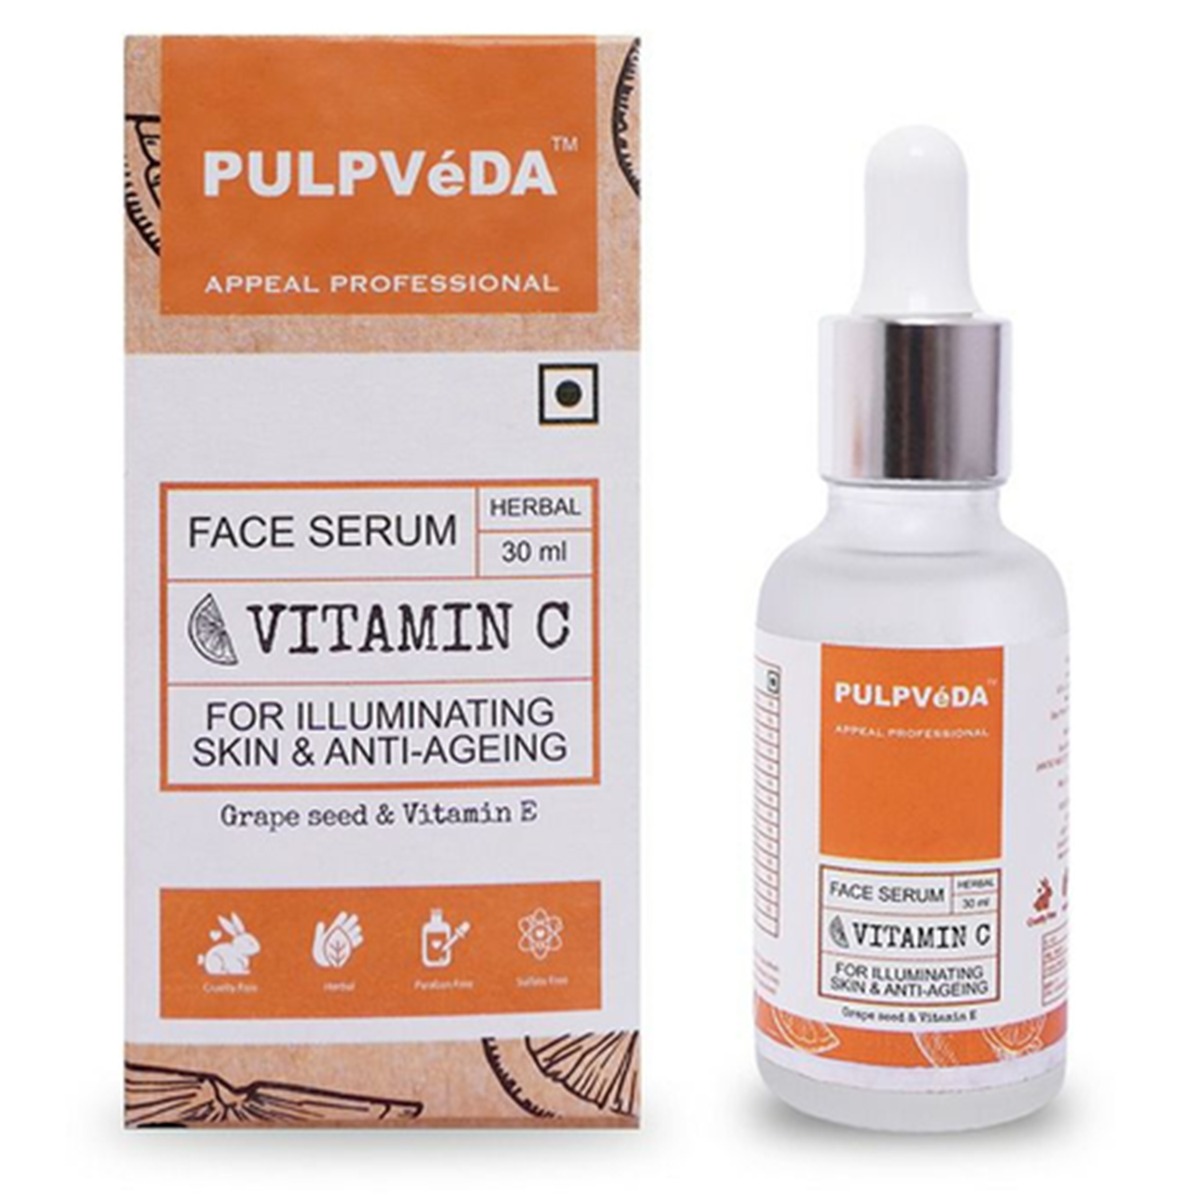 Pulpveda Vitamin C Face Serum With Grapeseed & Vitamin E, 30ml